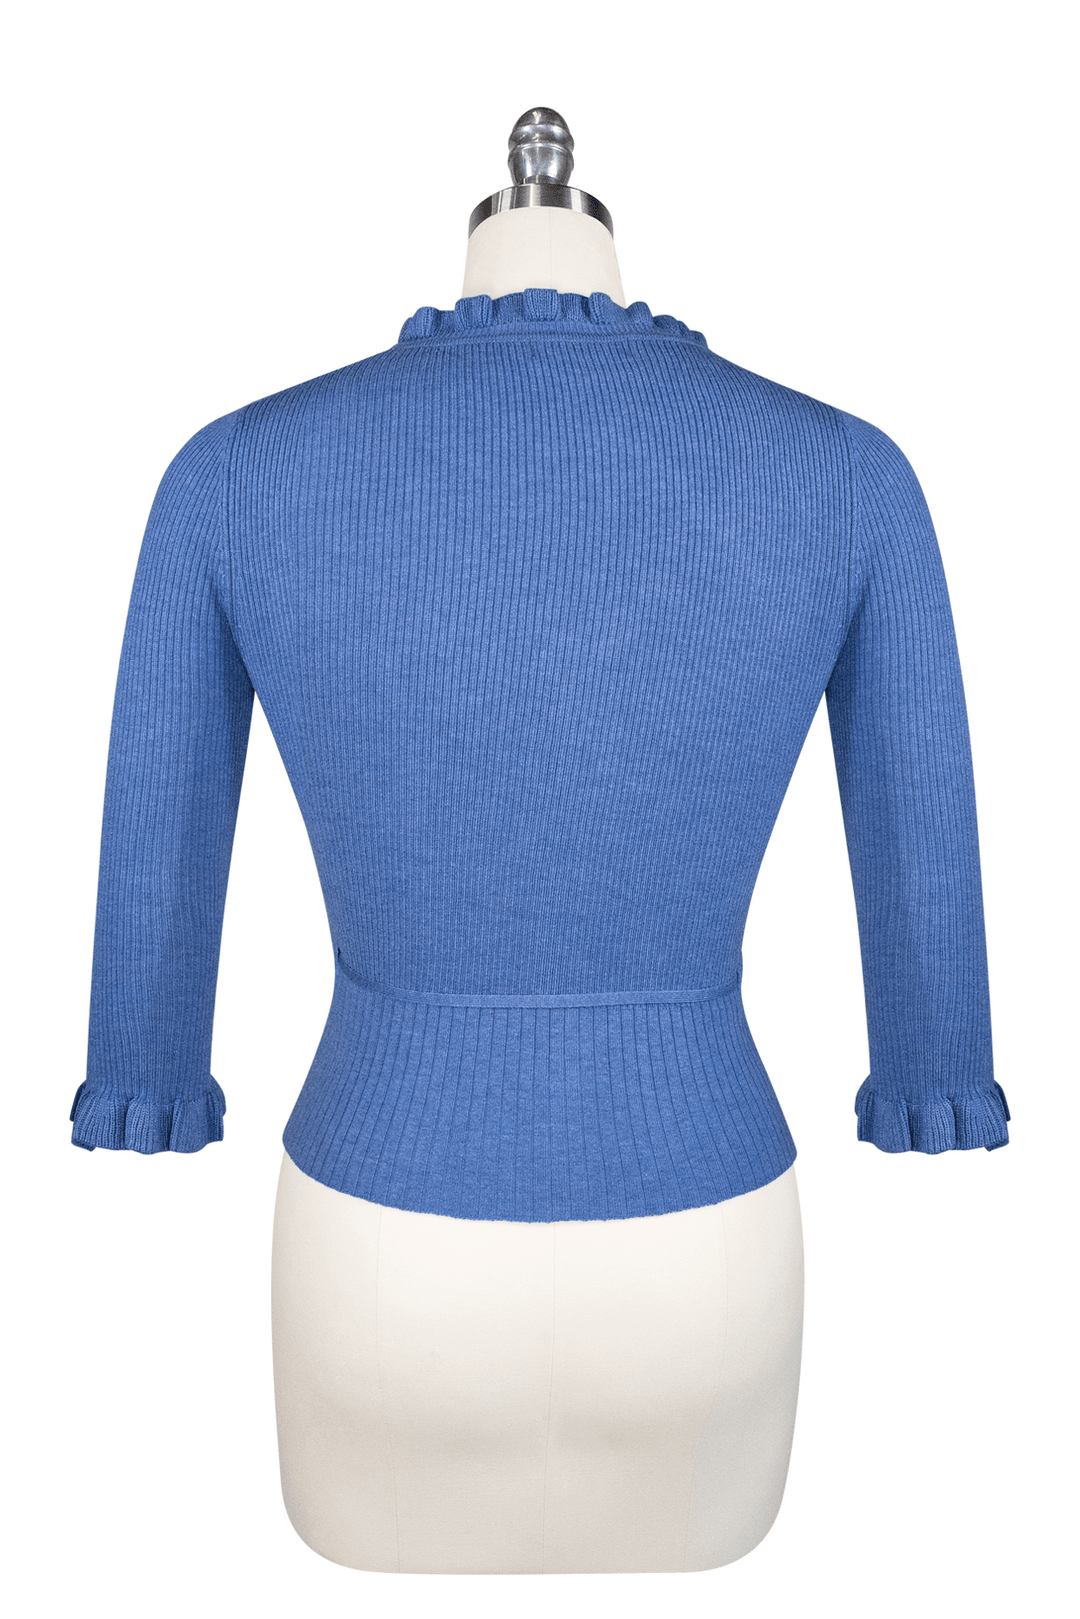 La Luna 3/4 Sleeve Knit Cardigan (Blue)